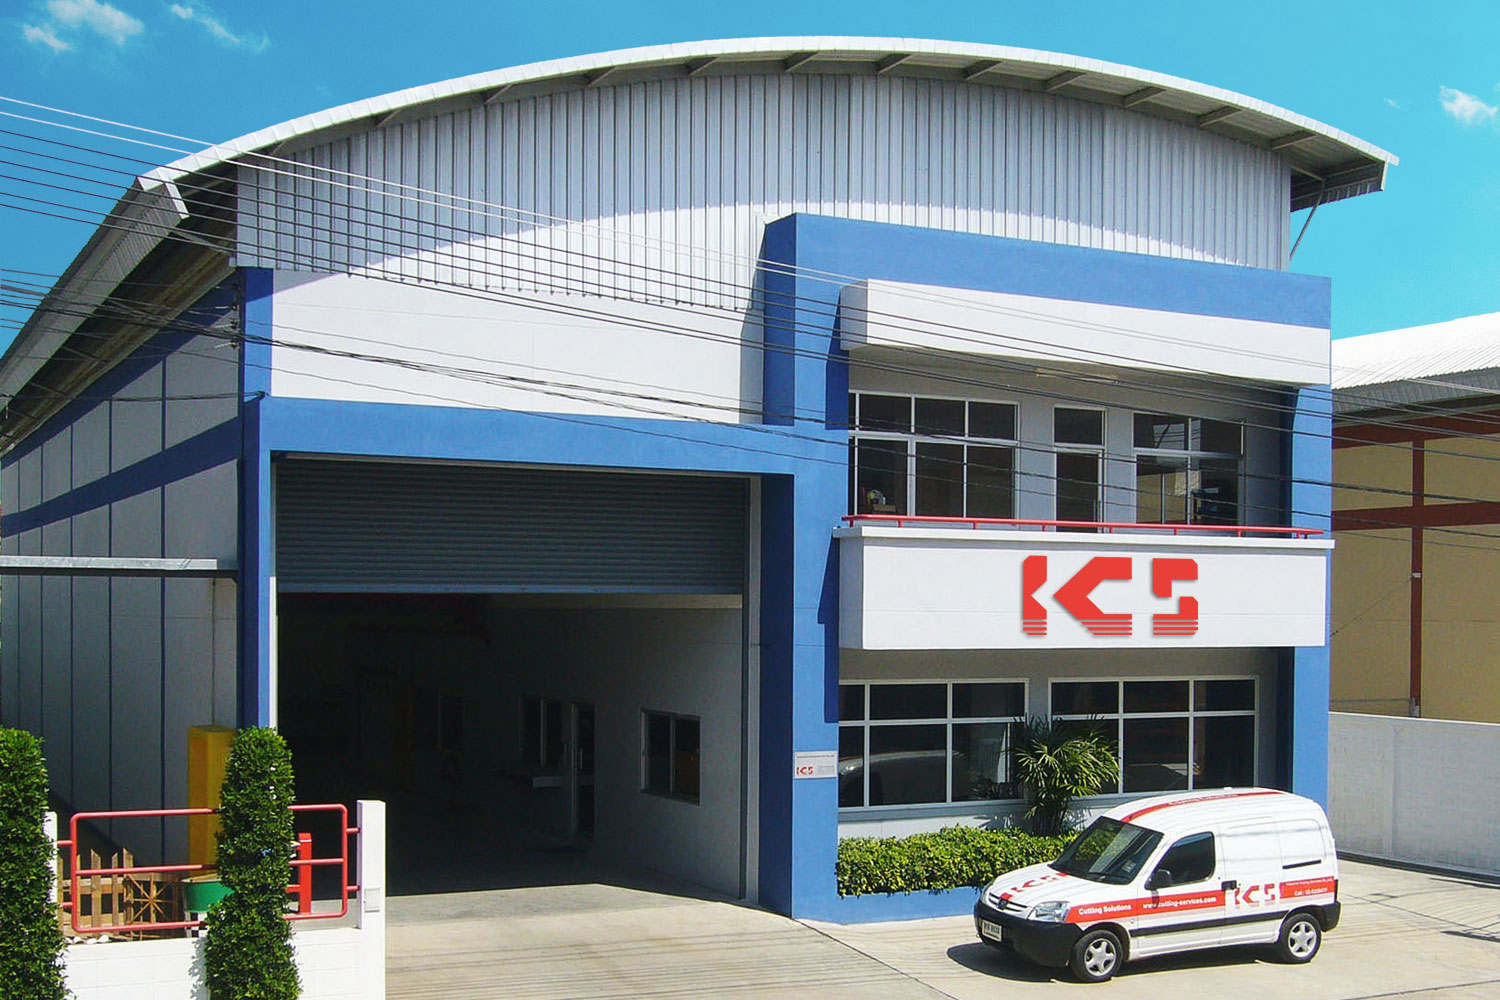 Factory ICS